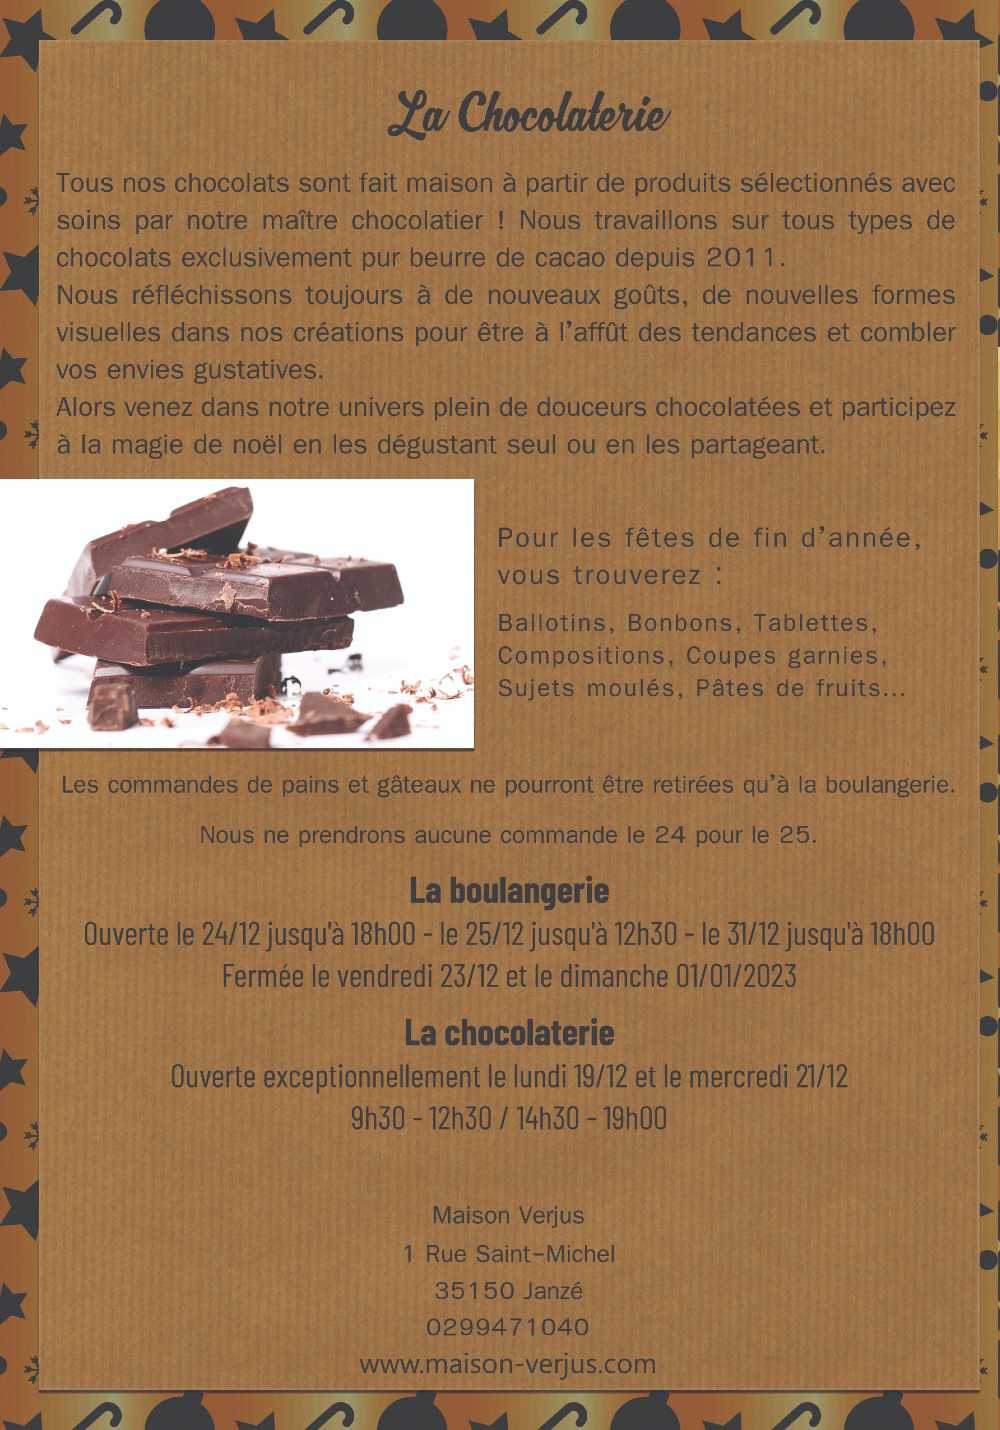 boulangerie-chocolaterie-maison-verjus-noel-2022-014